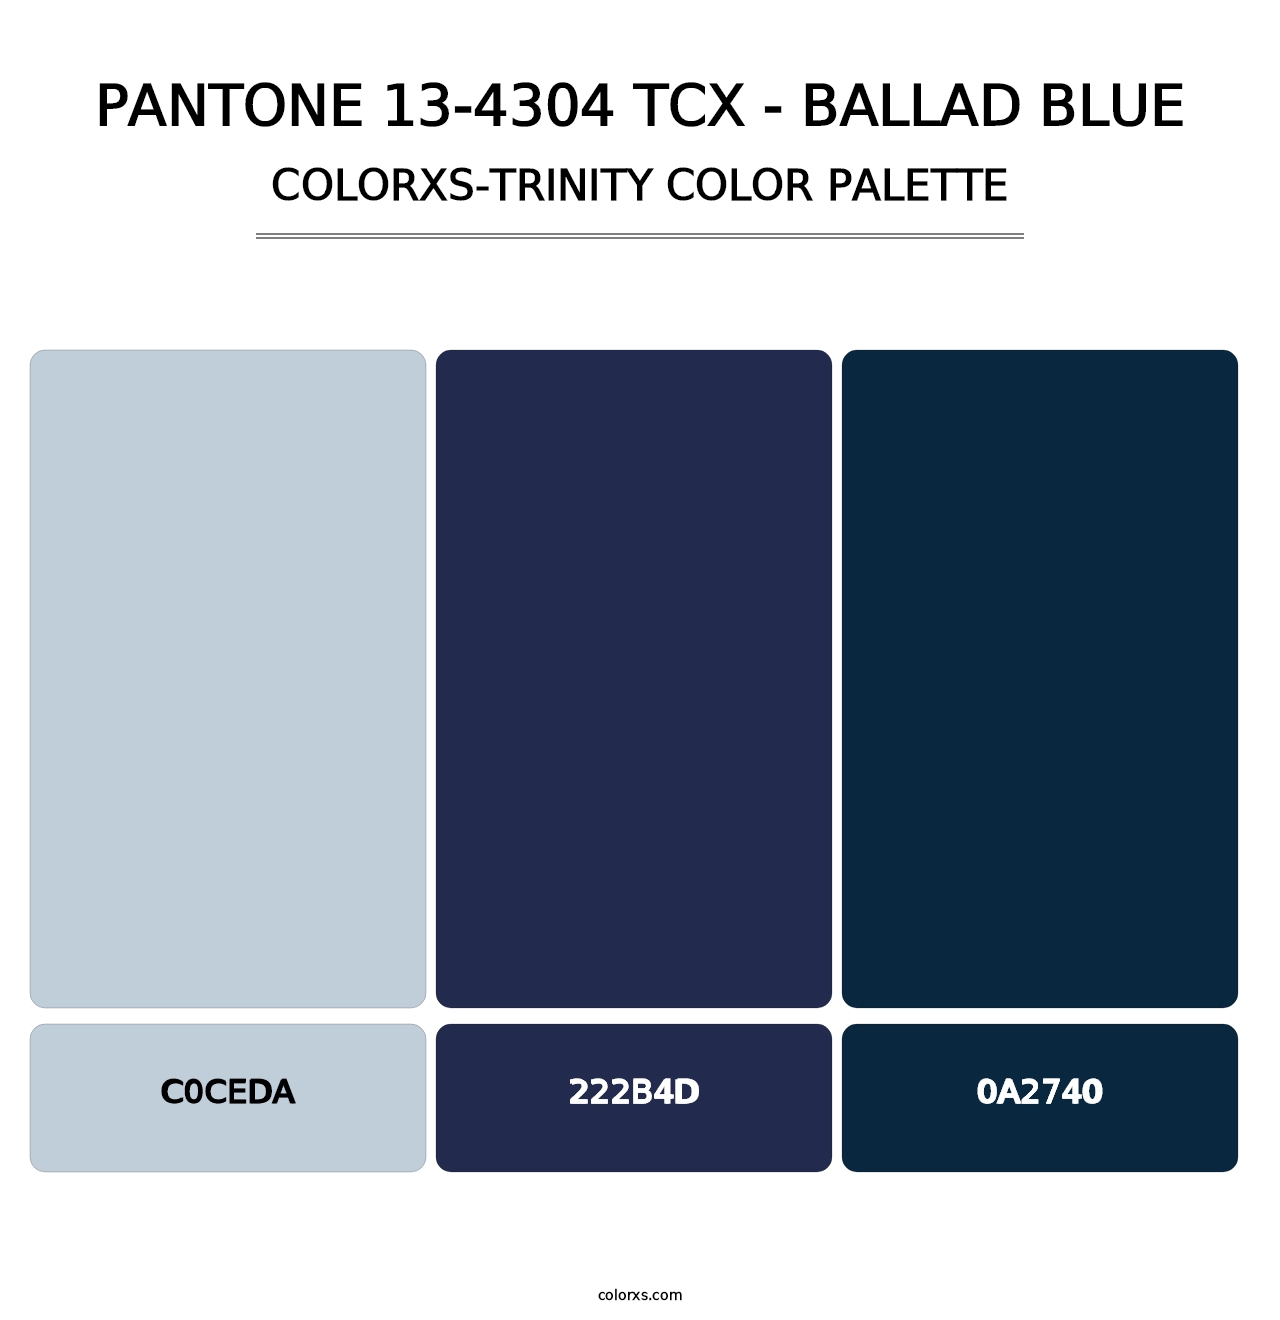 PANTONE 13-4304 TCX - Ballad Blue - Colorxs Trinity Palette